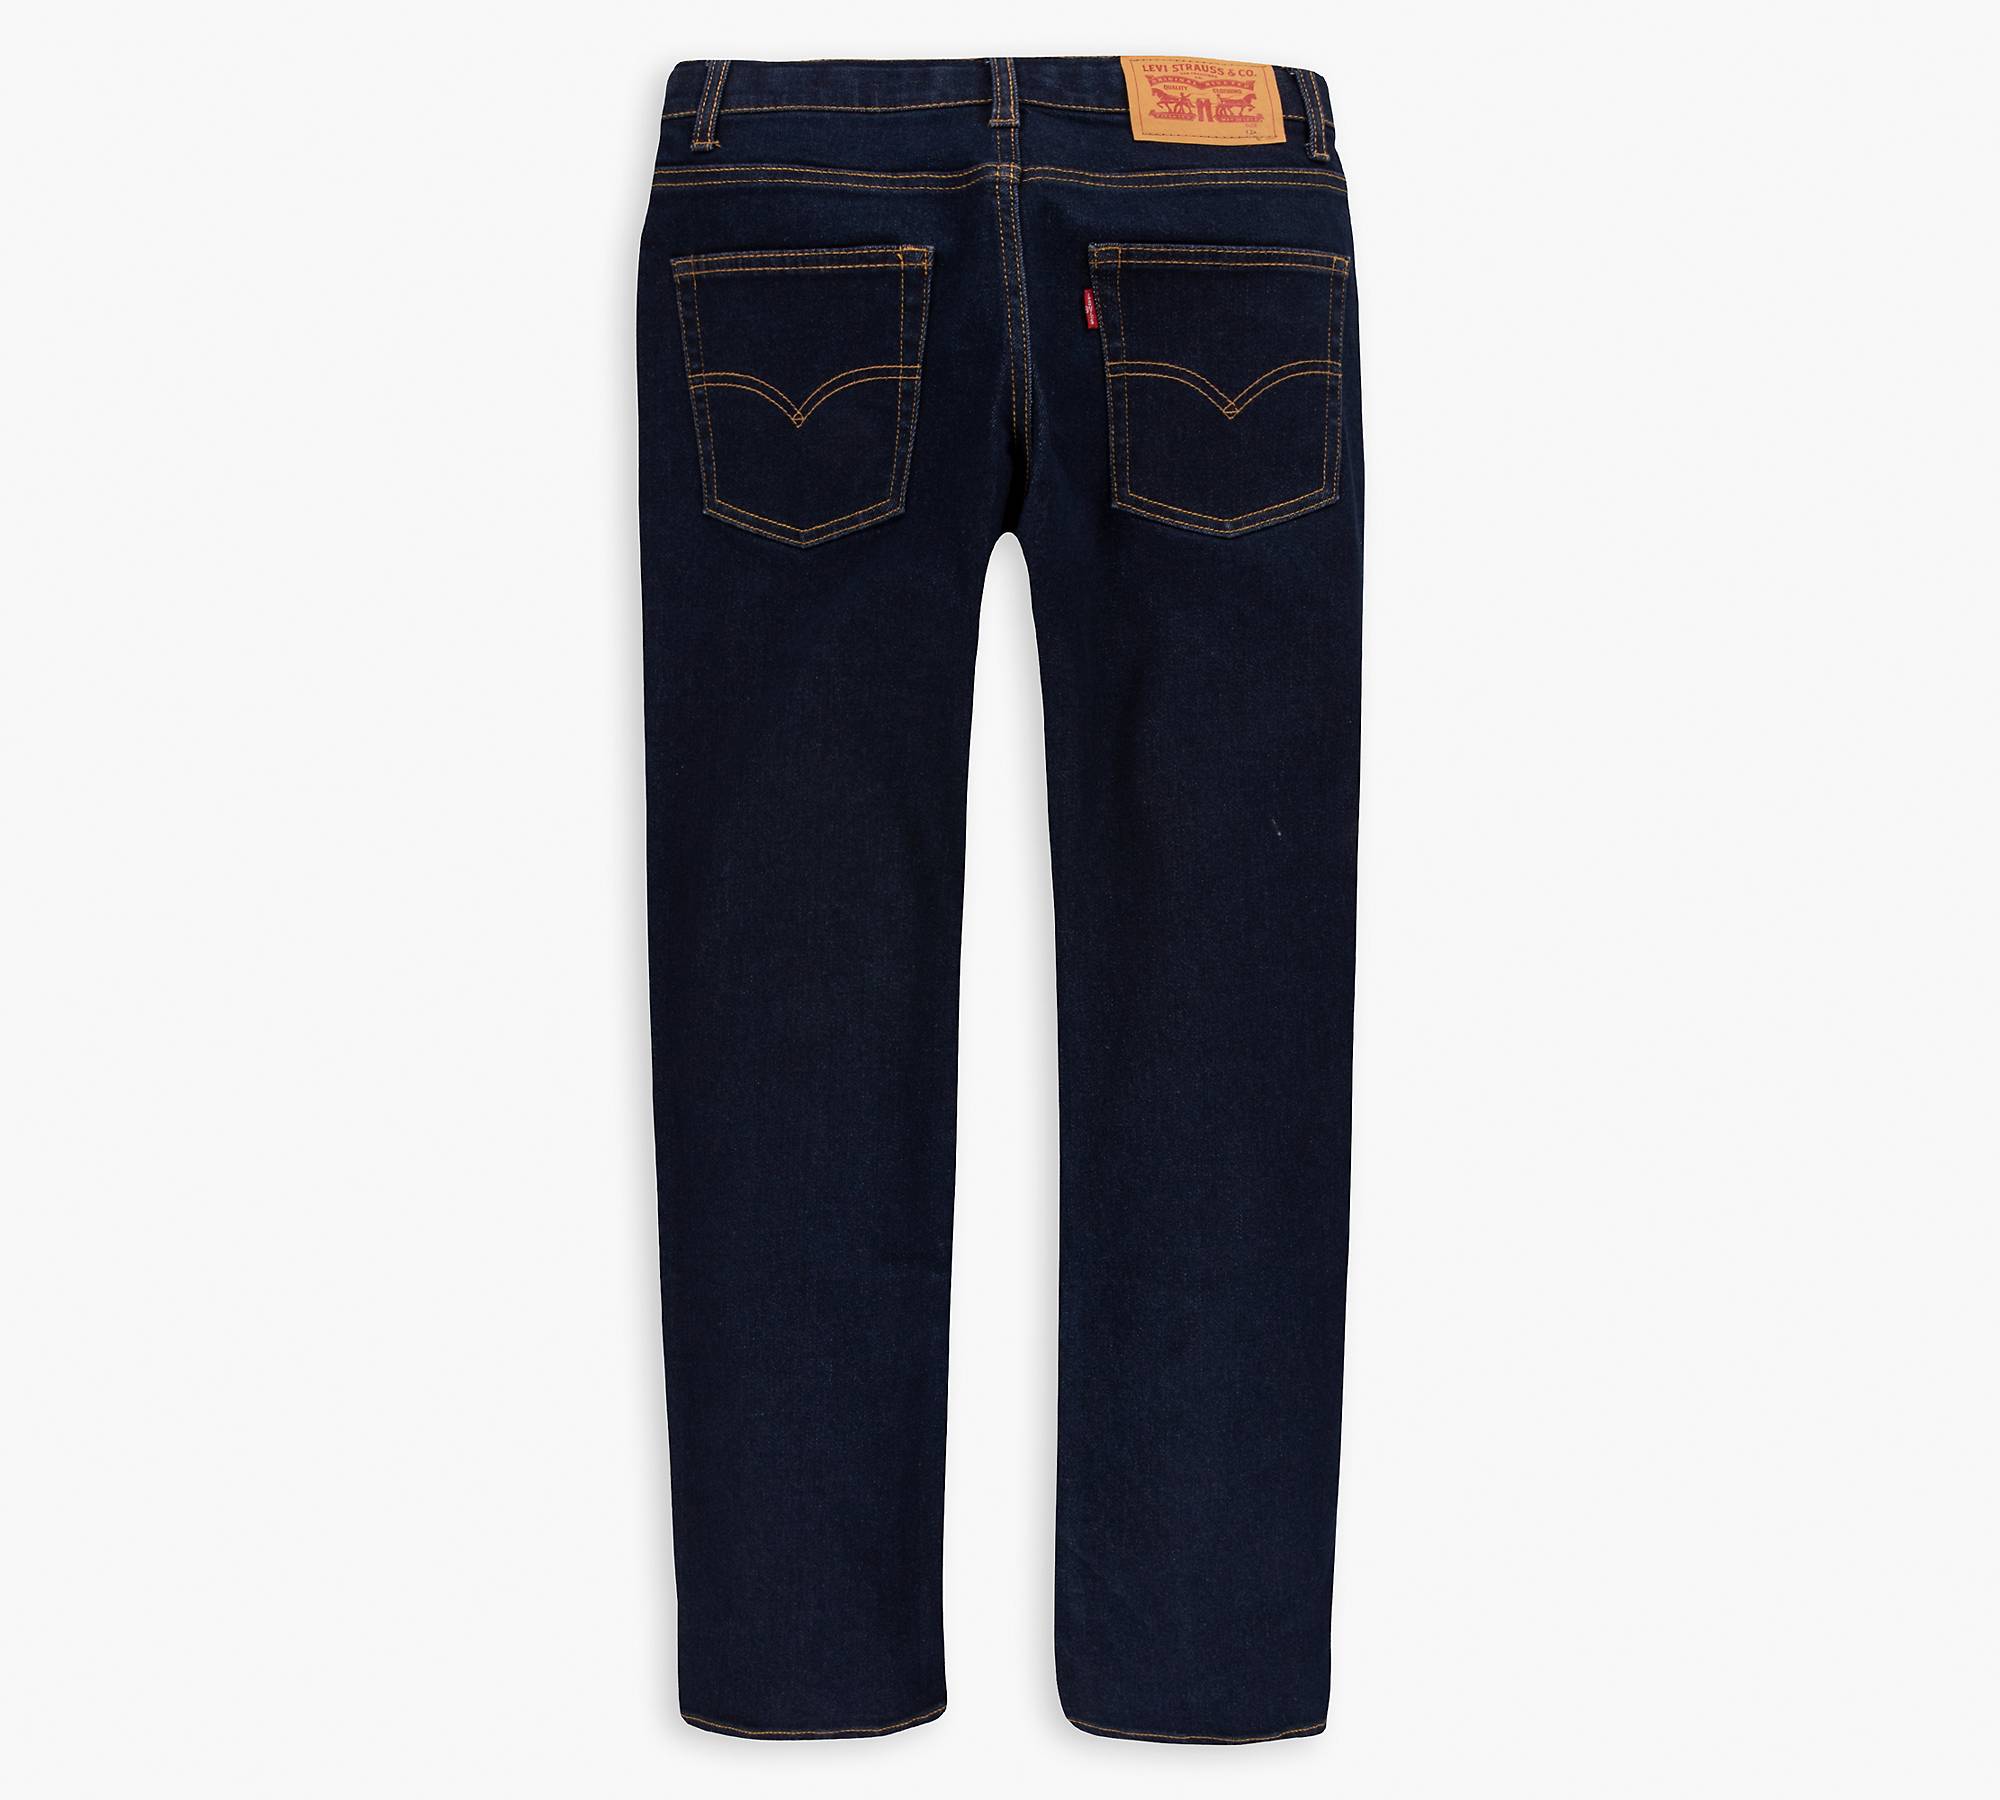 Stay Loose Taper Big Boys Jeans 8-20 - Dark Wash | Levi's® US